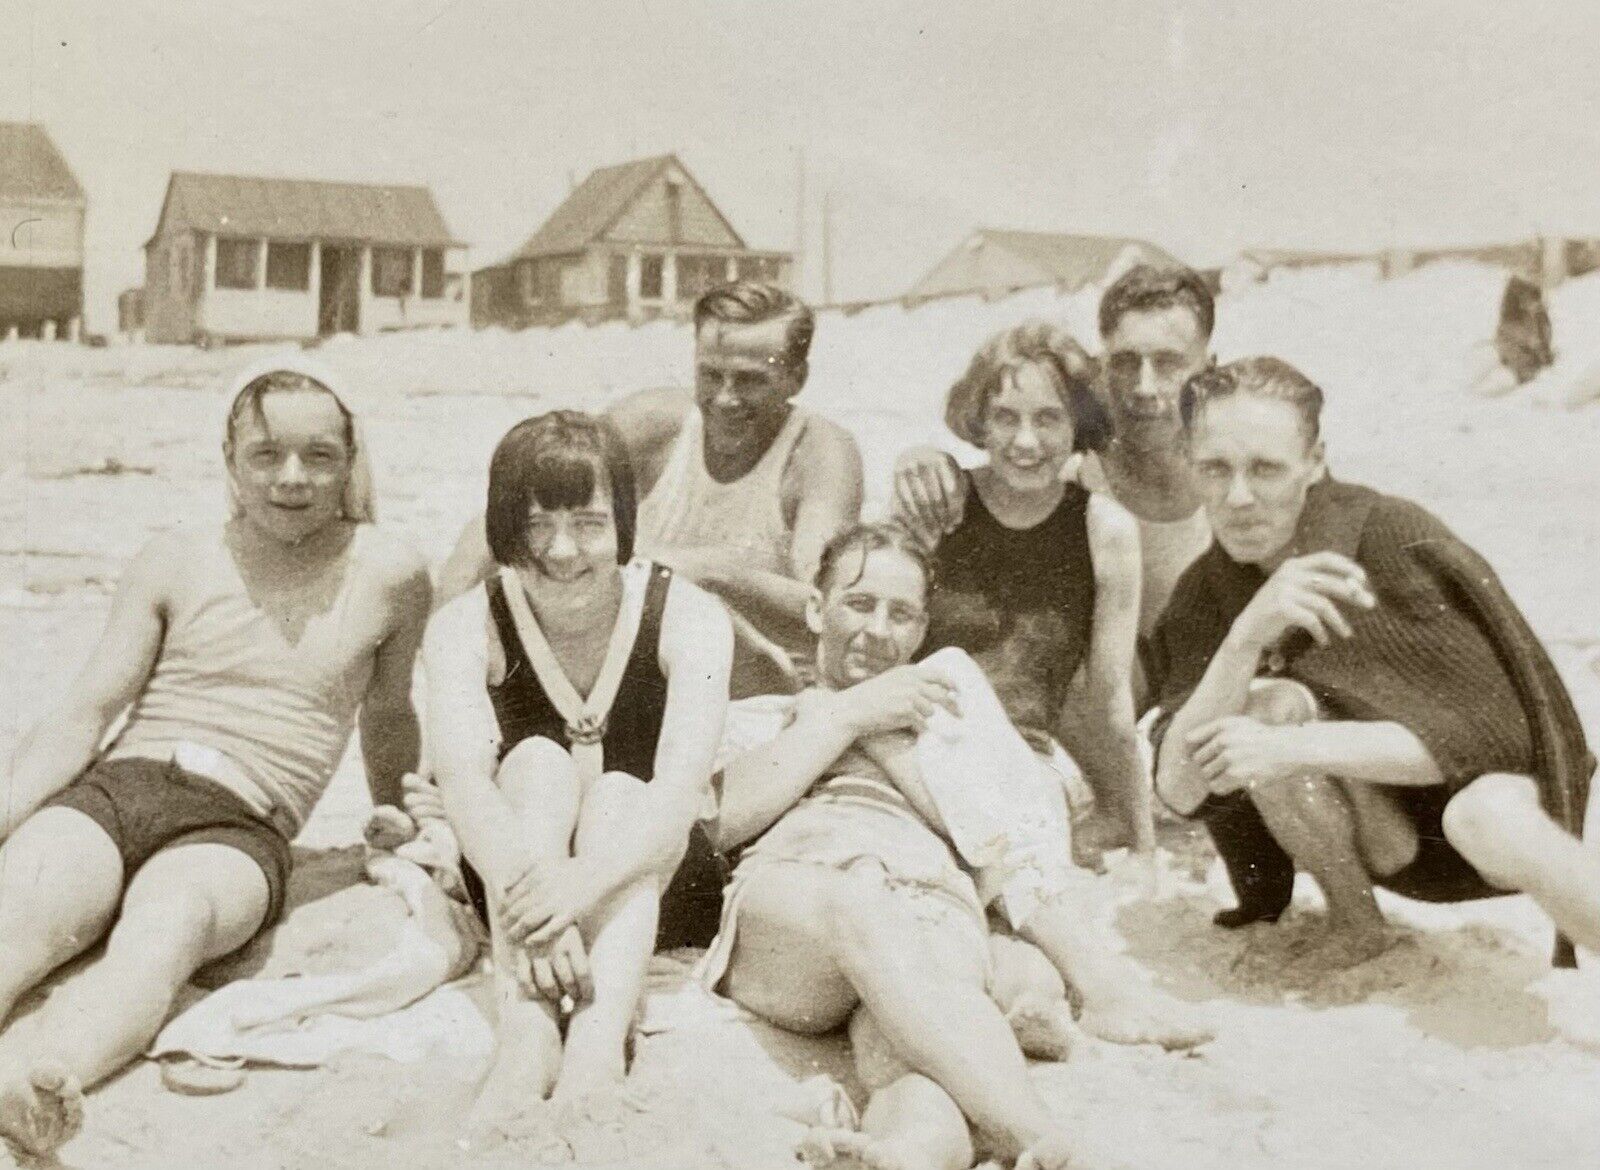 Rockaway Beach 1925 Queens New York Playful Group of People 2 Vintage Photos